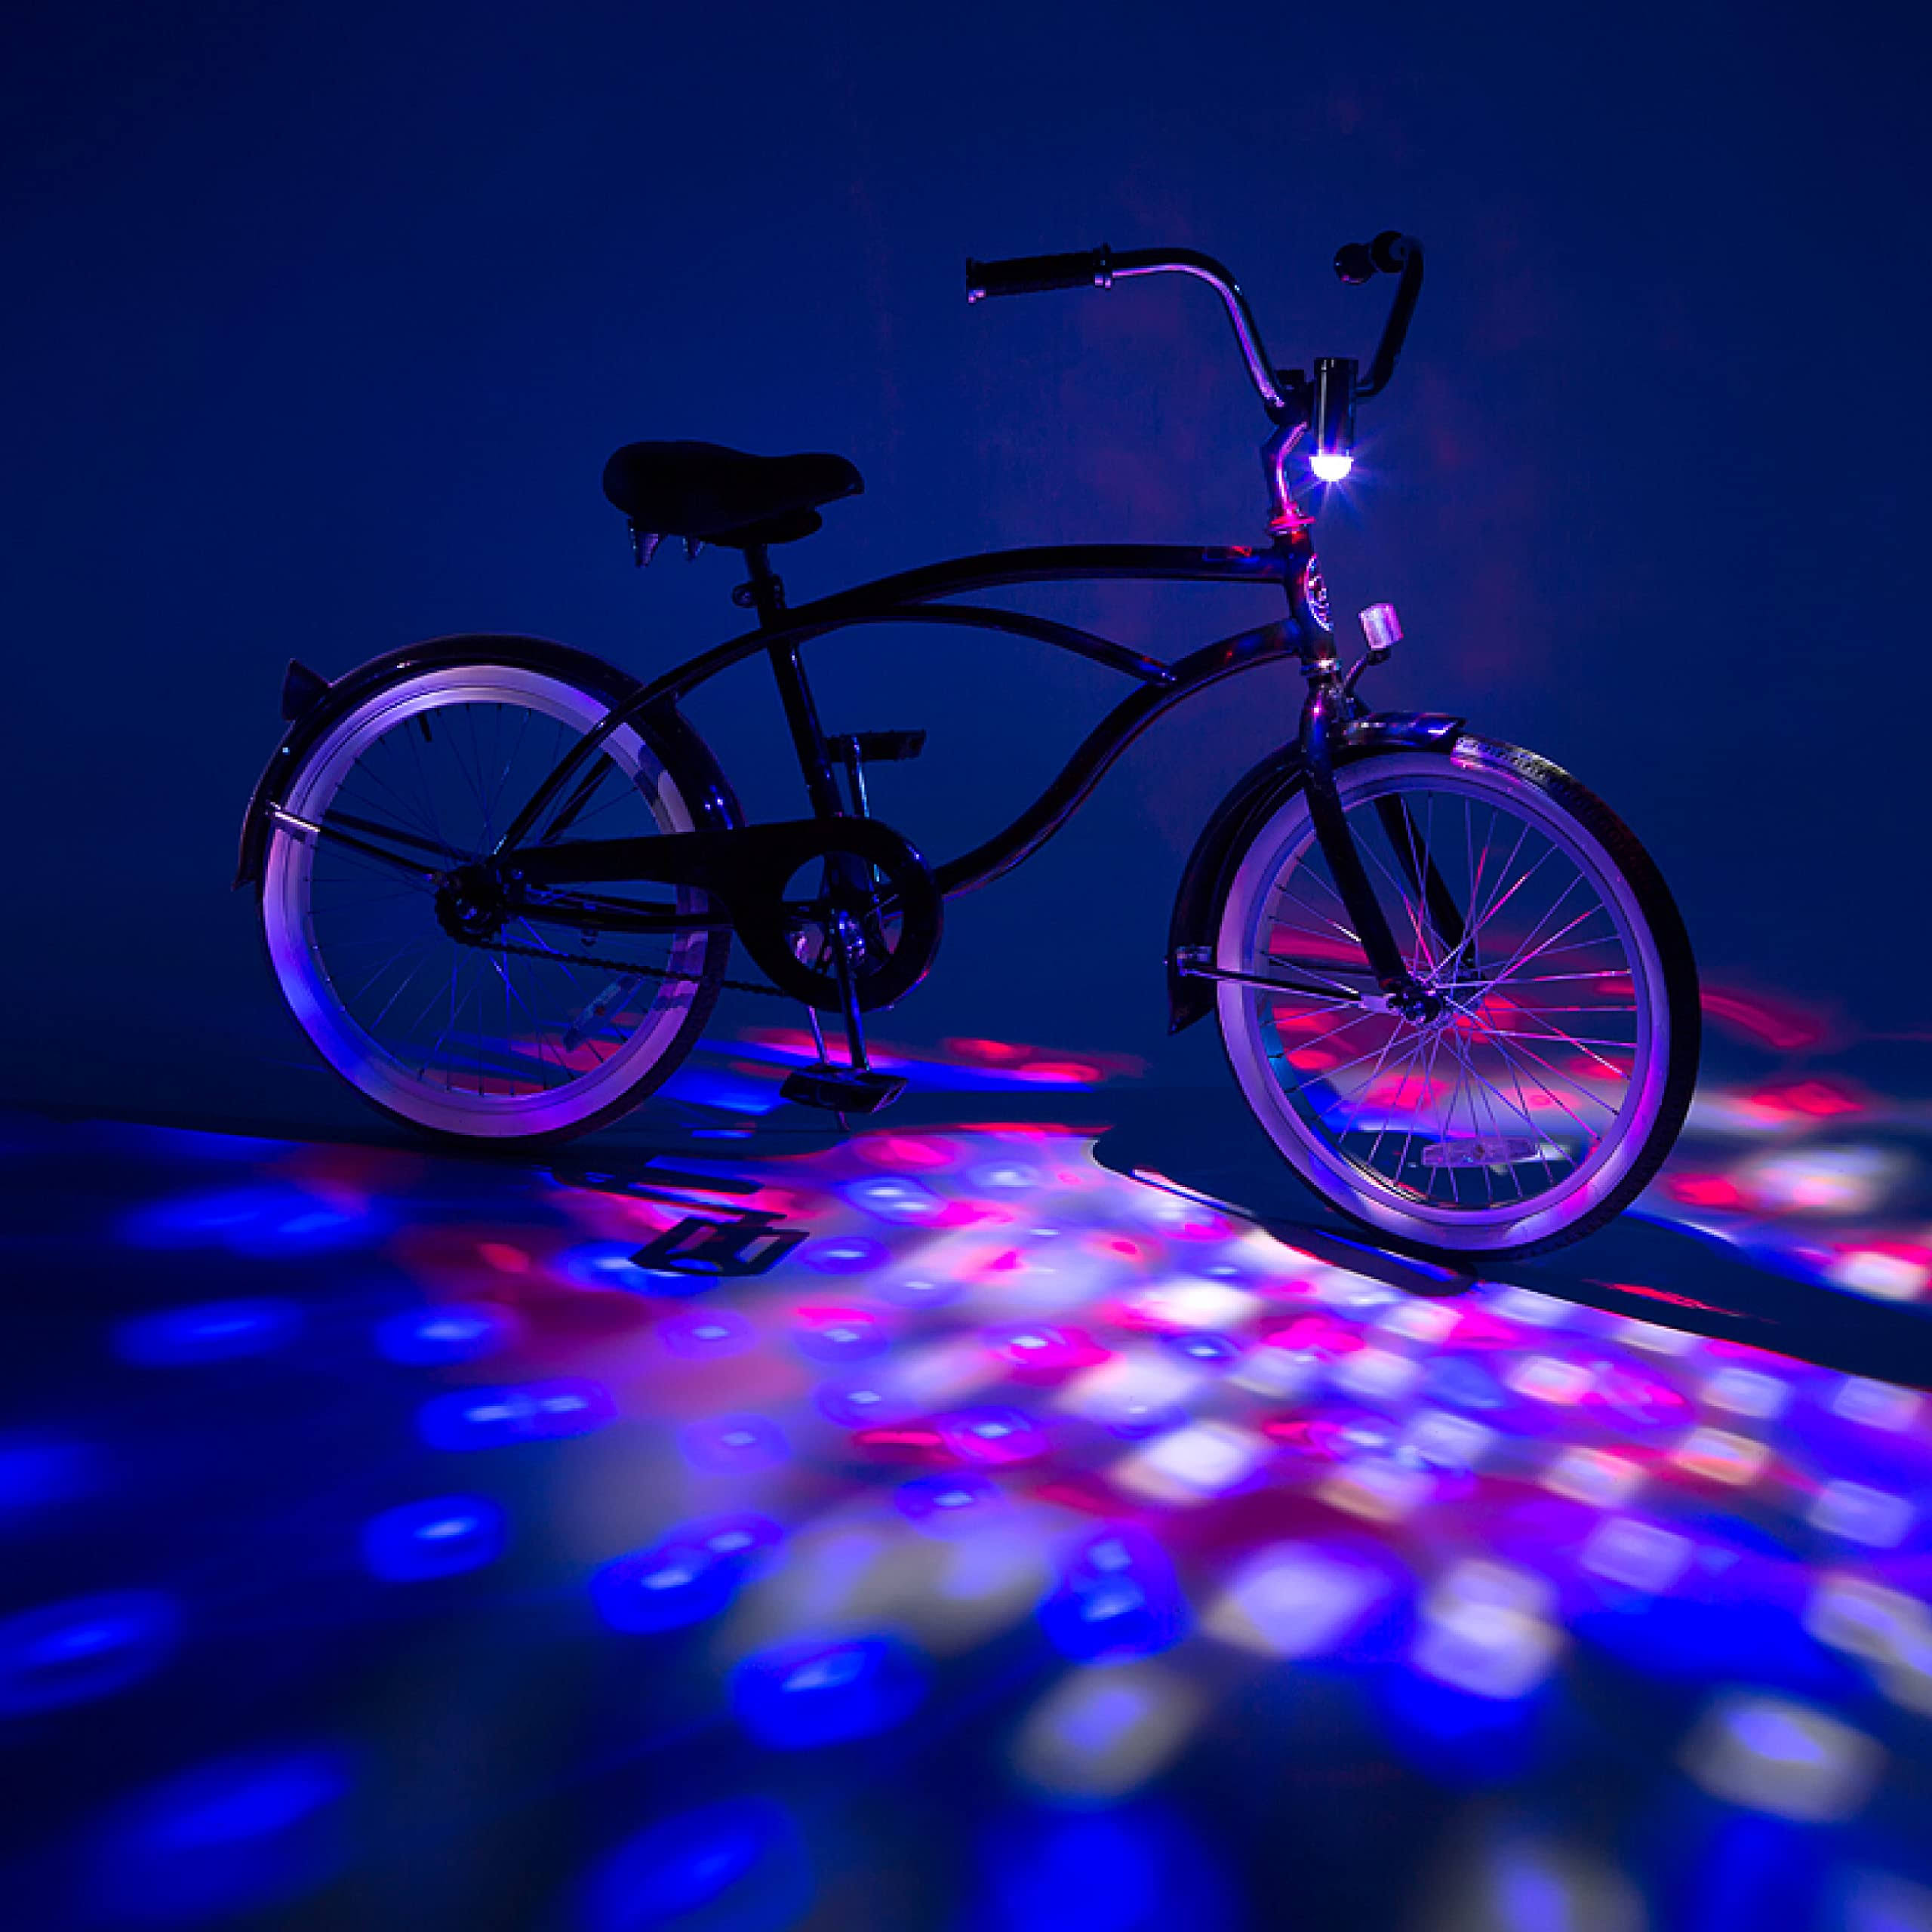 Brightz SpokeBrightz LED Bicycle Spoke Accessory Light (for 1 Wheel)